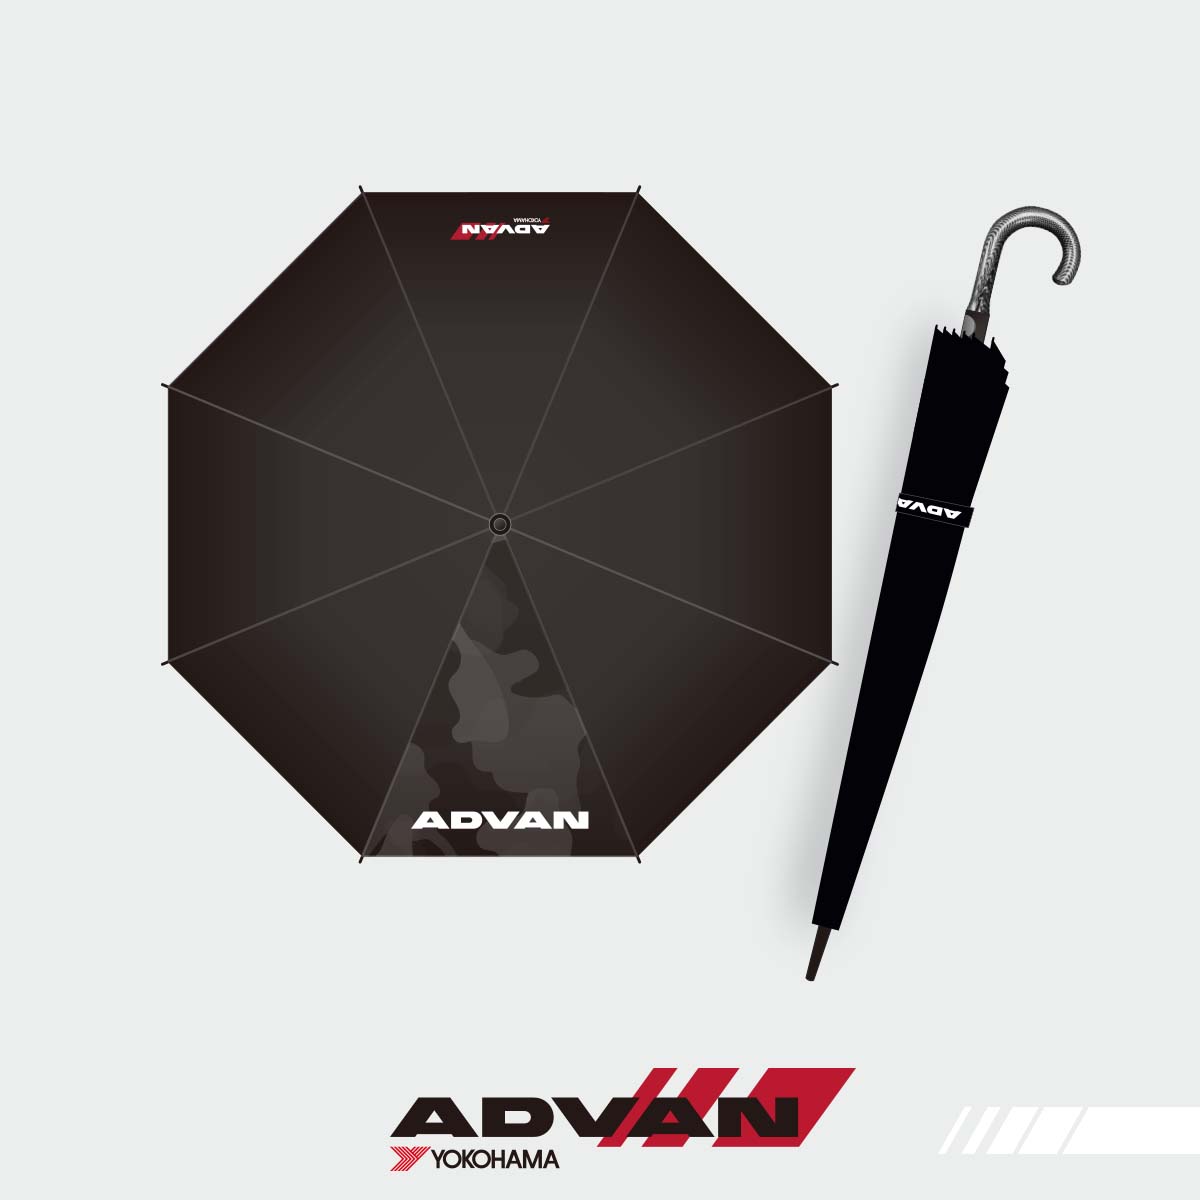 ADVAN Straight Umbrella - Camaflouge